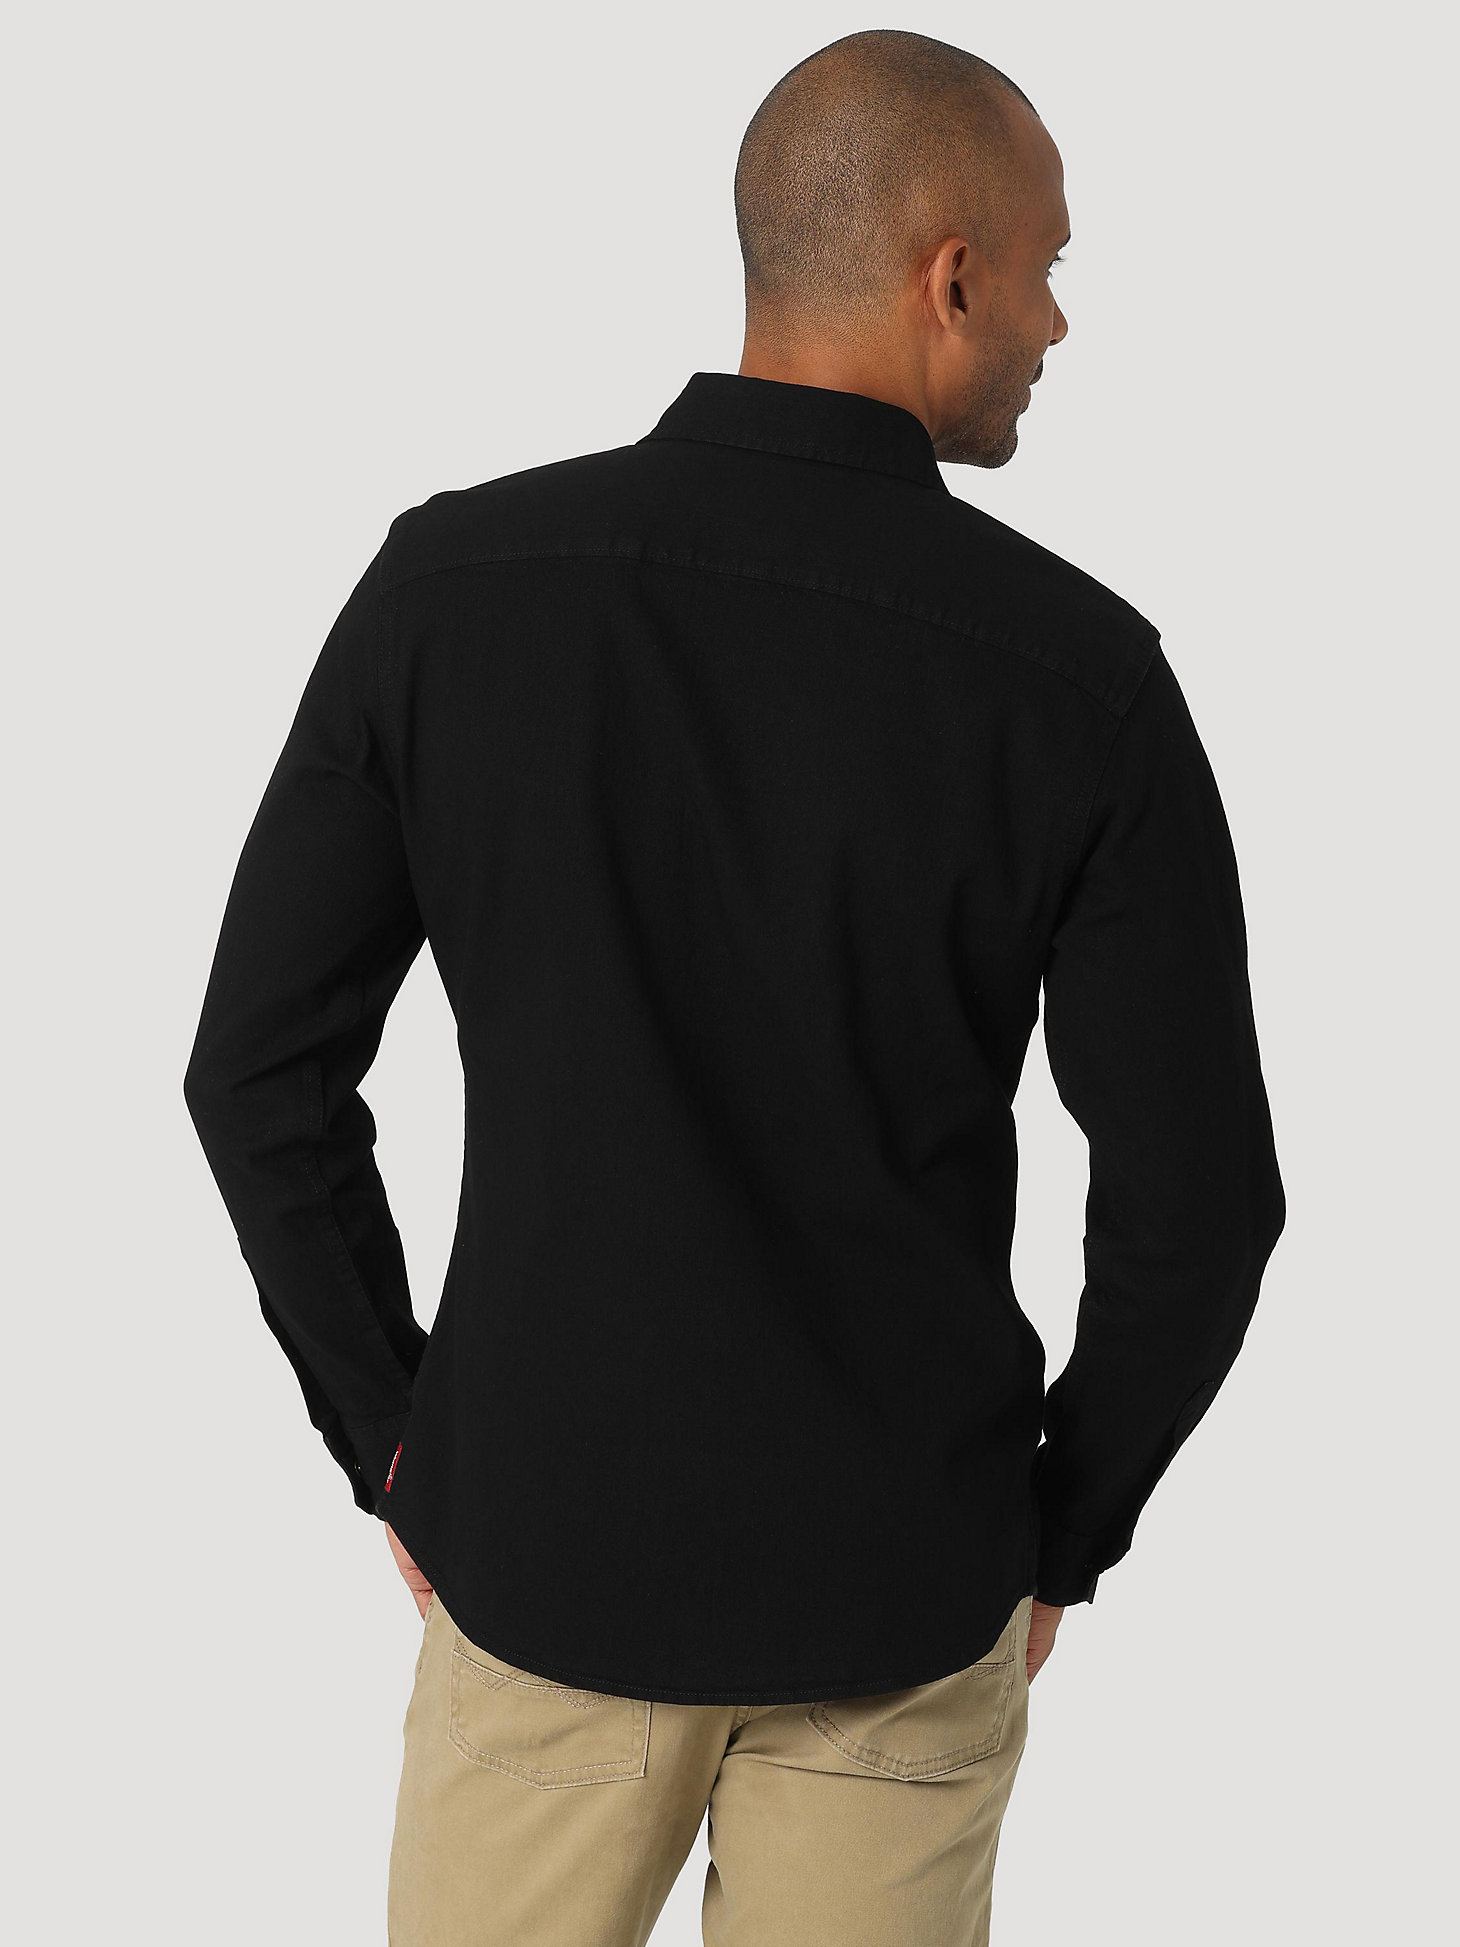 Men's Comfort Flex Denim Shirt in Black alternative view 1